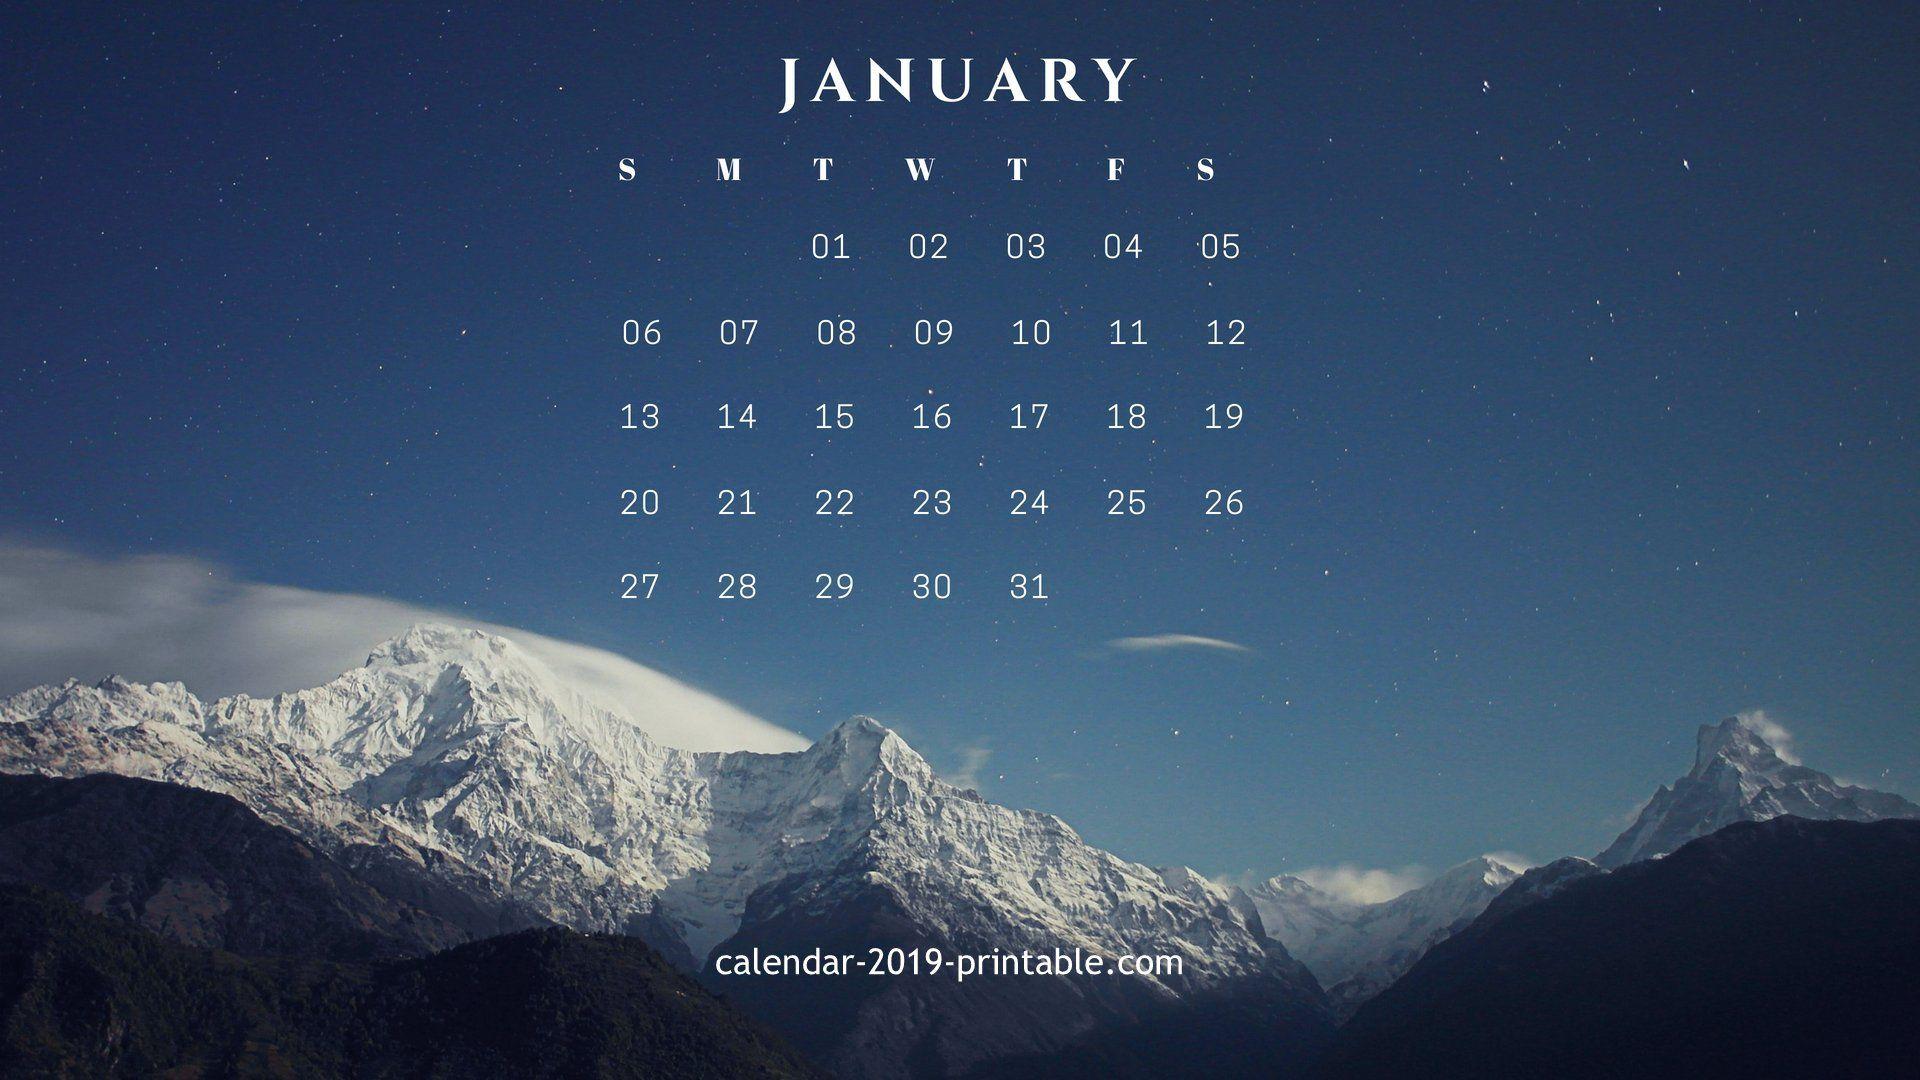 January 2019 Calendar Desktop Wallpaper. Calendar 2019 Printable